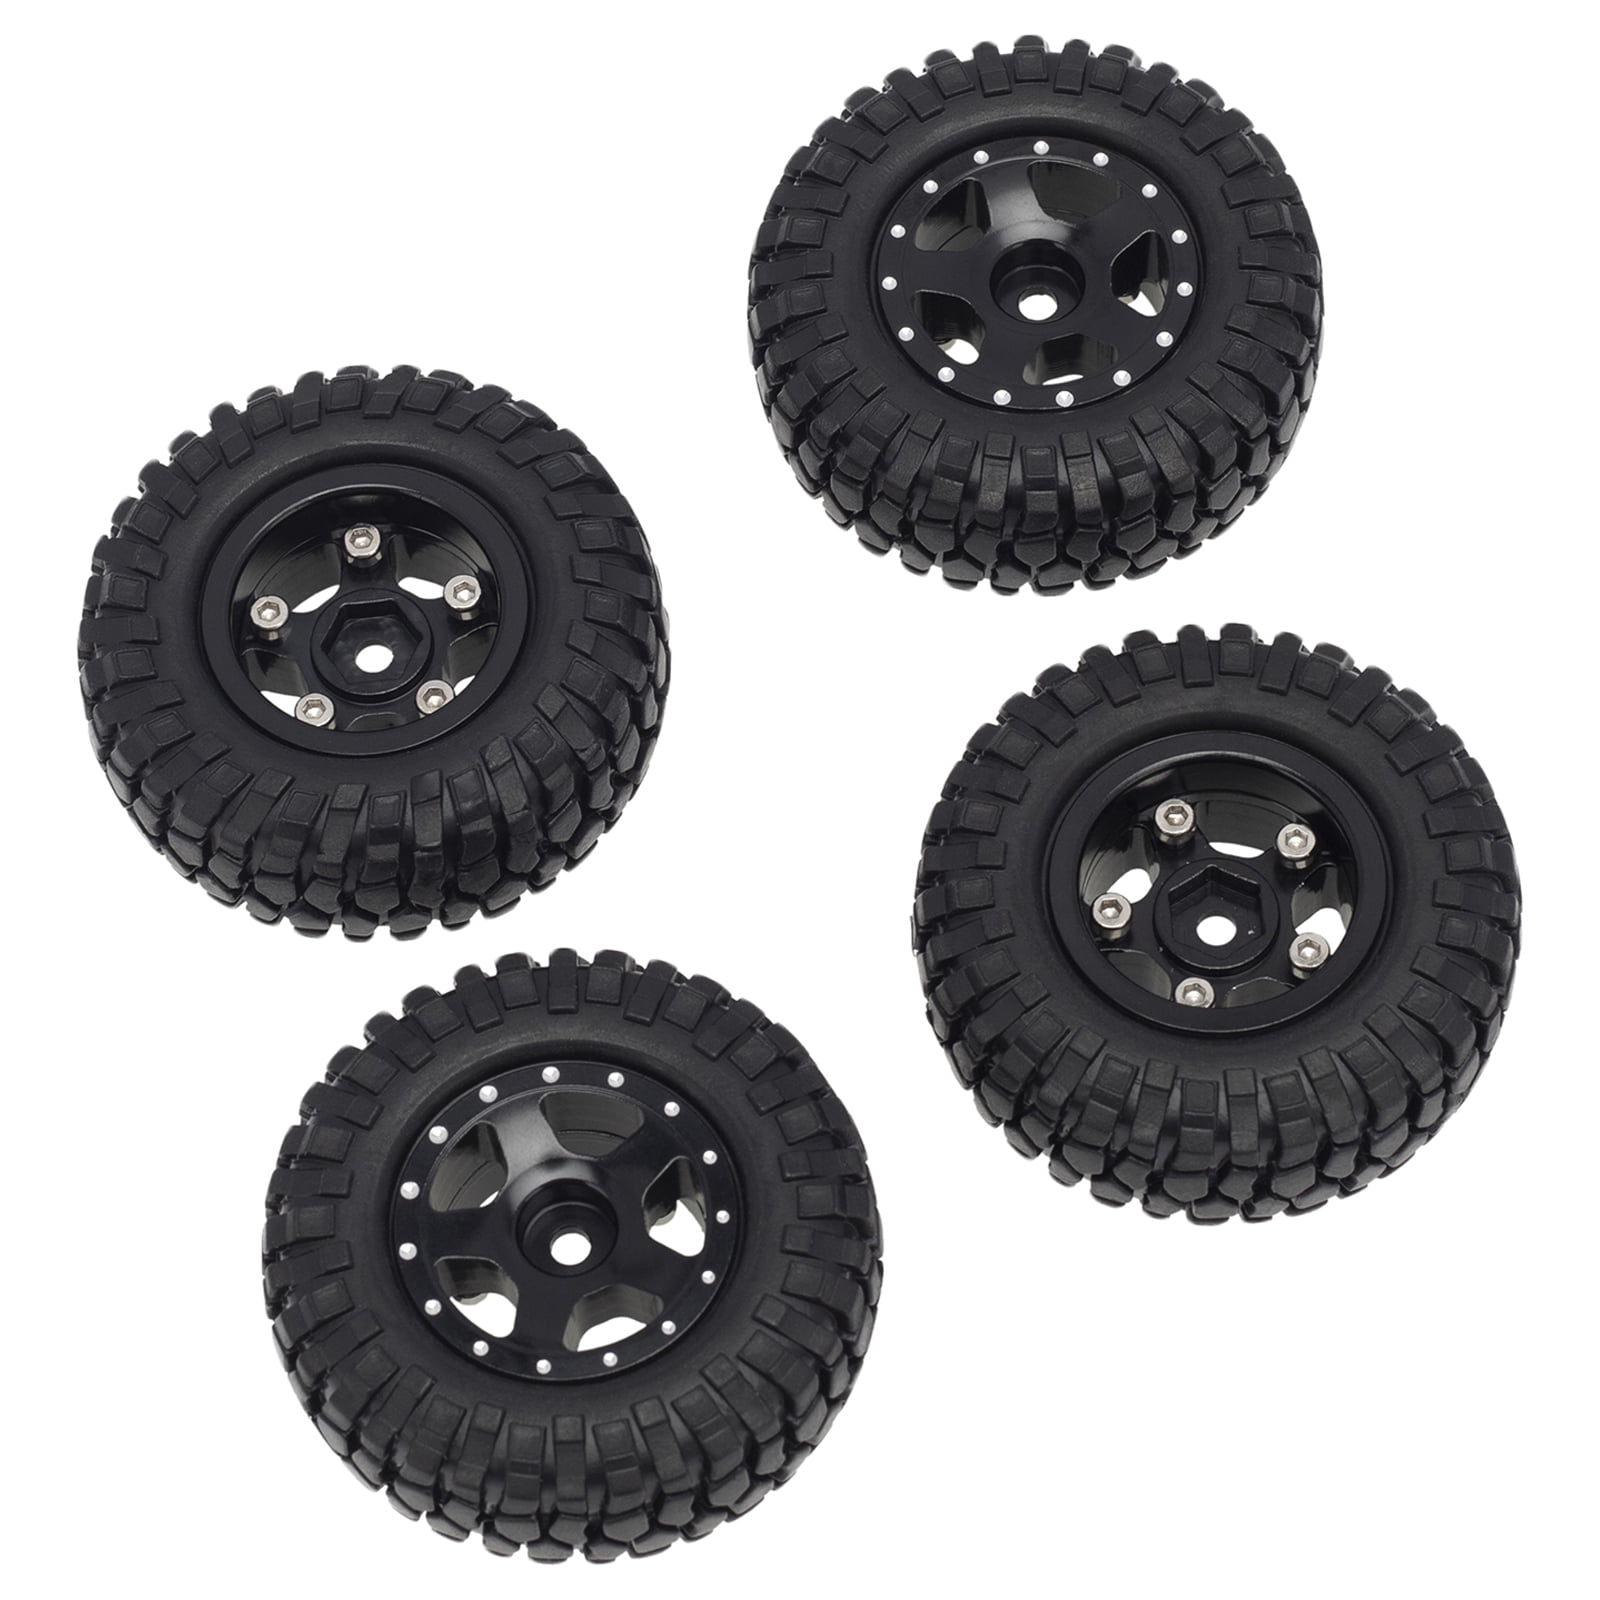 4Pack of 1:24 RC Model Crawler Car Rubber Wheel Tires for AXIAL SCX24 Trucks DIY